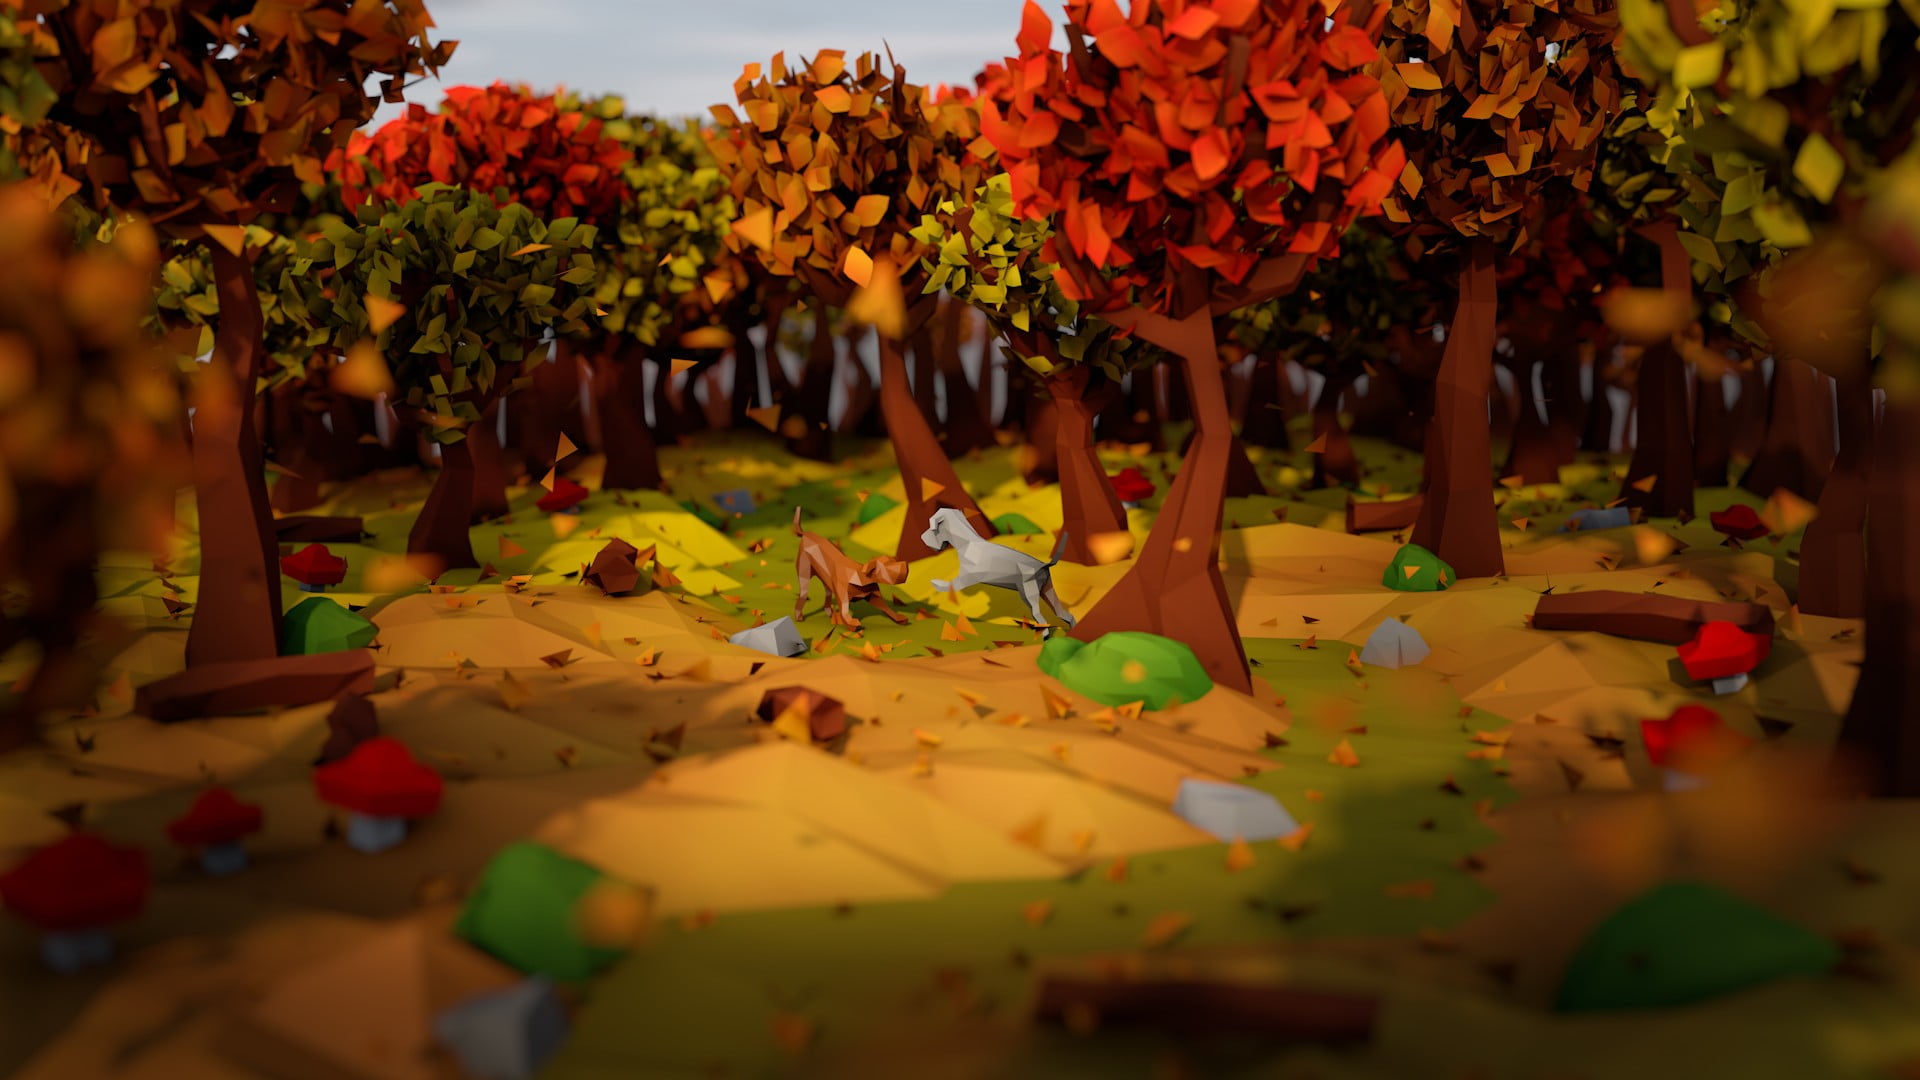 red leaf trees near animals cartoon illustration, artwork, digital art